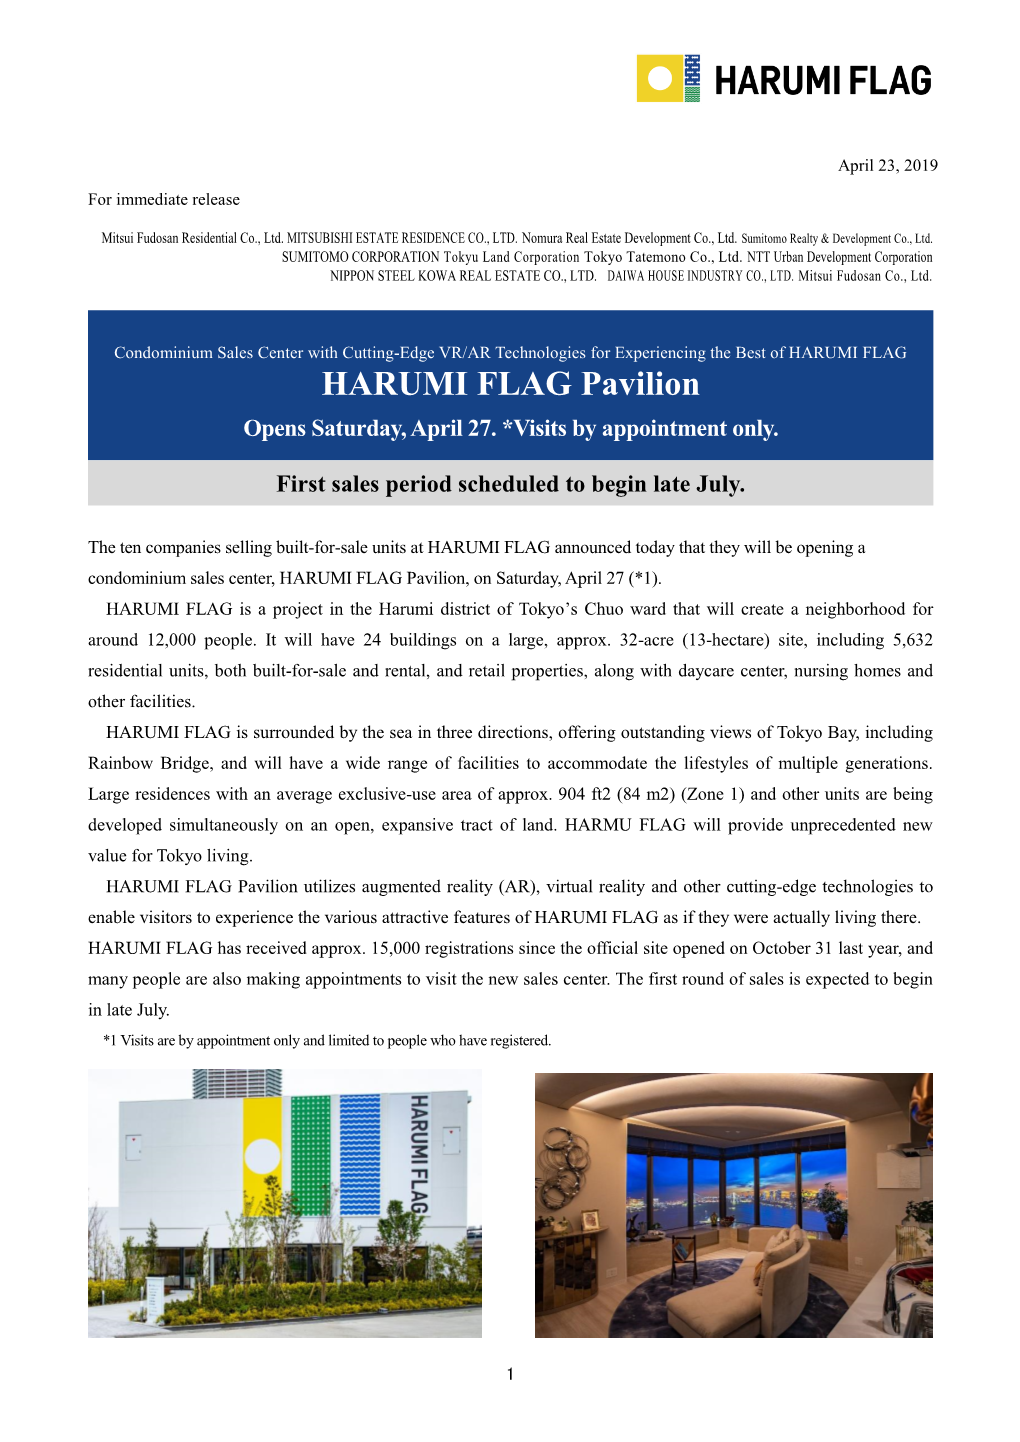 HARUMI FLAG Pavilion Opens Saturday, April 27